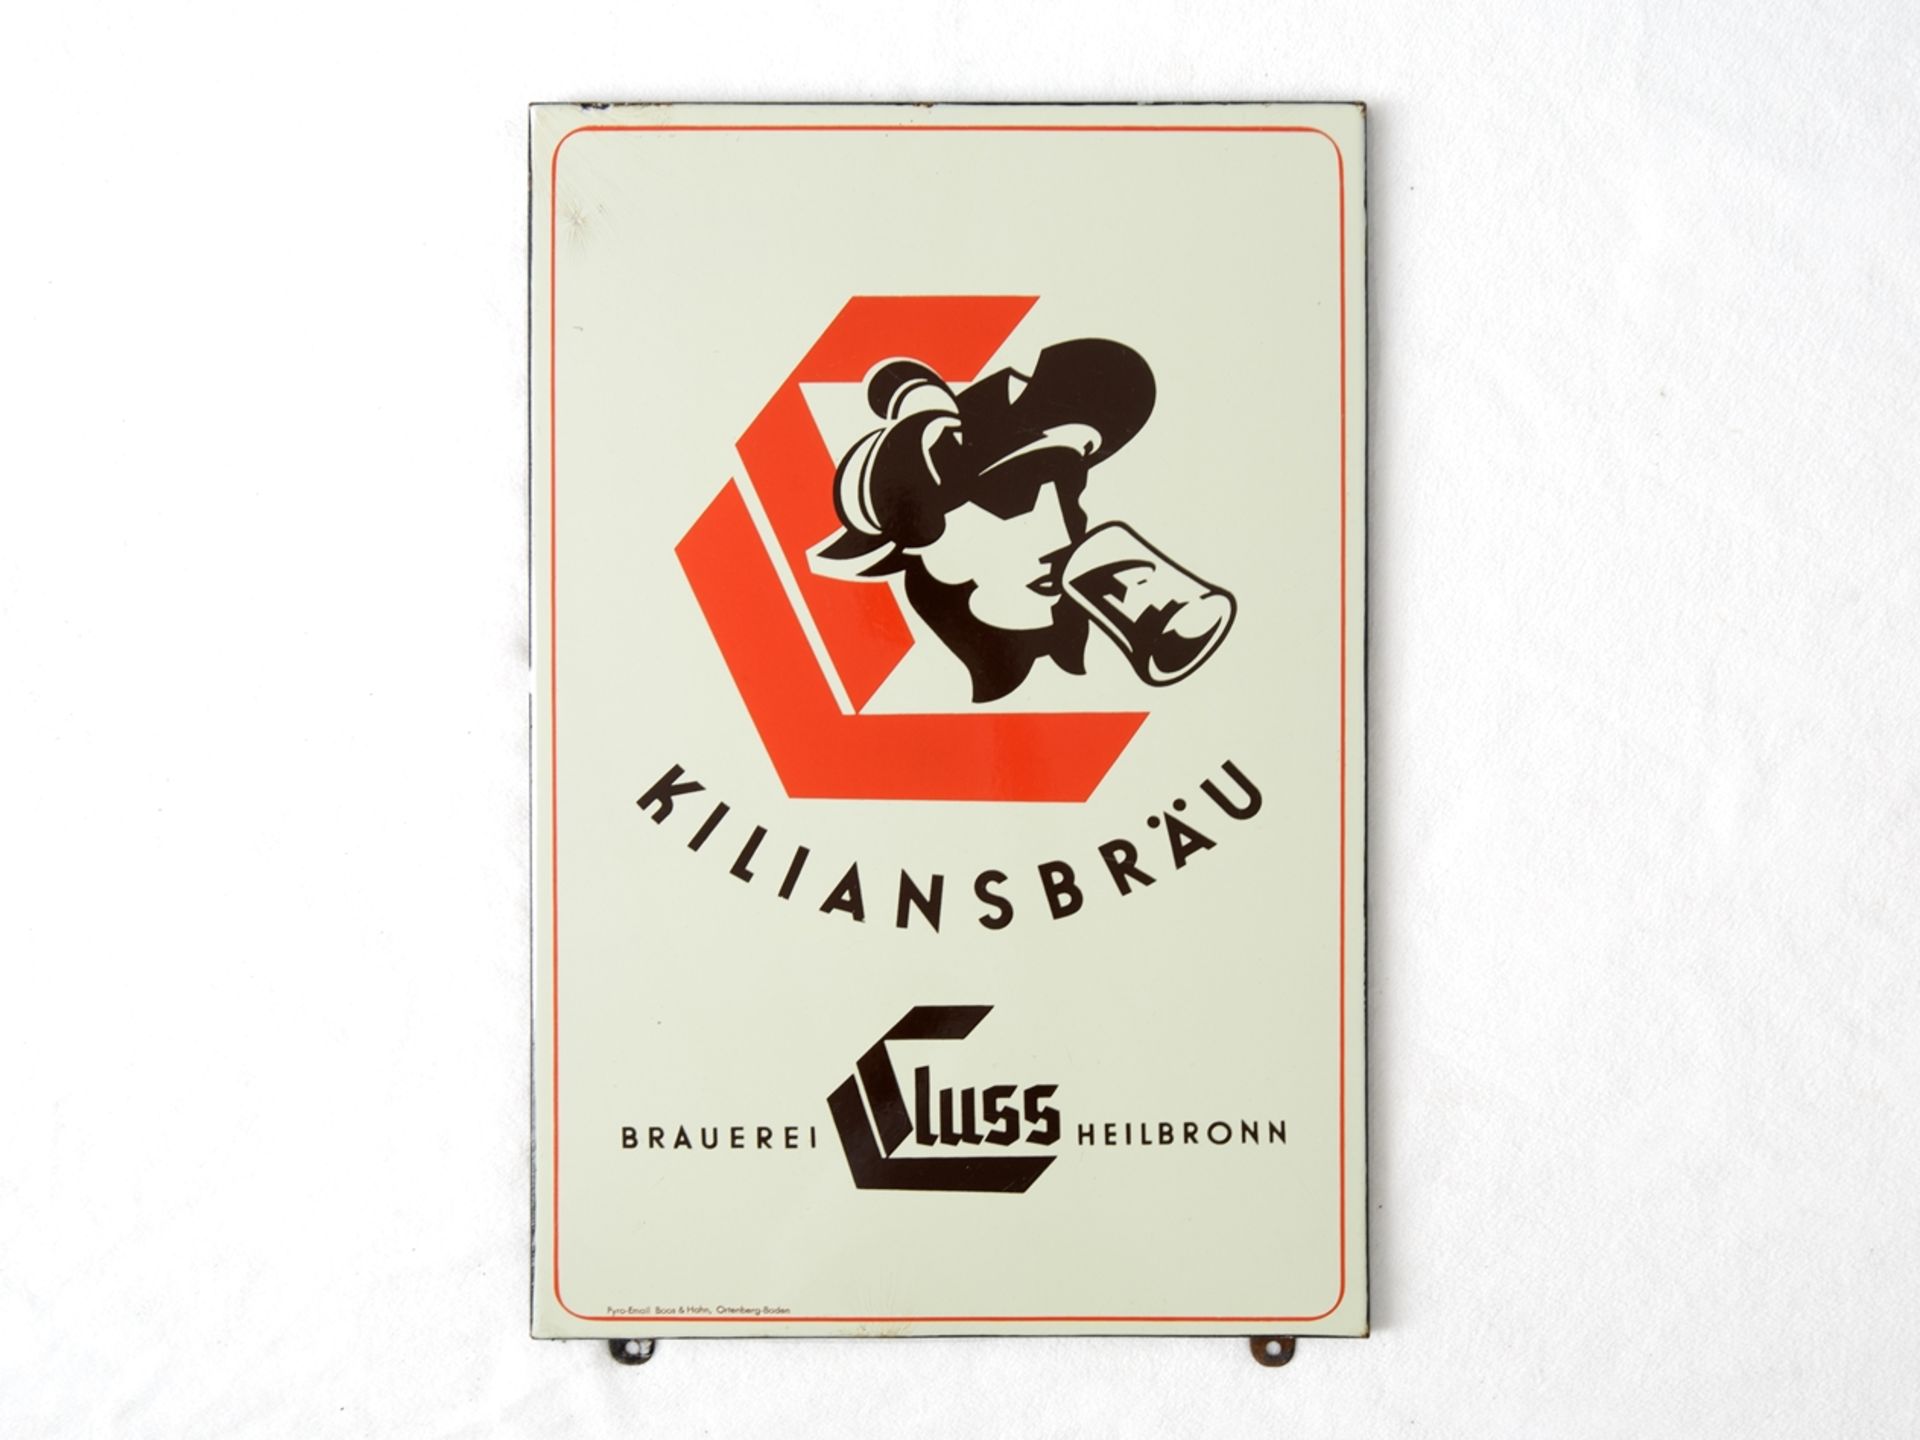 Emailschild Kiliansbräu, Brauerei Cluss Heilbronn, um 1950 - Bild 7 aus 7